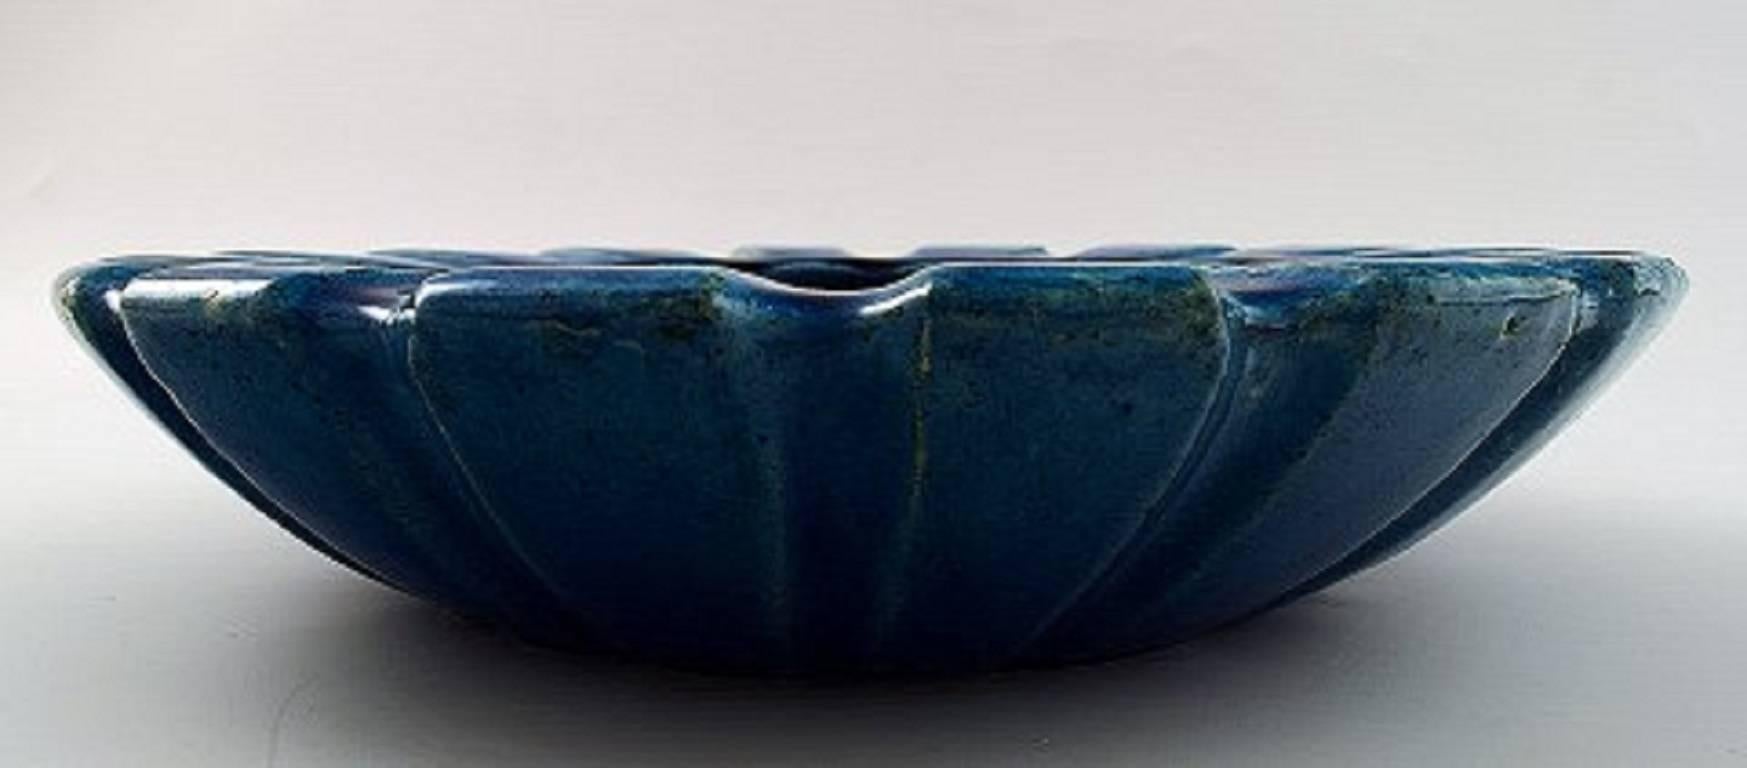 Kähler, Denmark, round glazed dish, 1940s.
Designed by Svend Hammershøi. Blue glaze.
Measures 27 x 6 cm. 
Stamped. 
In perfect condition.